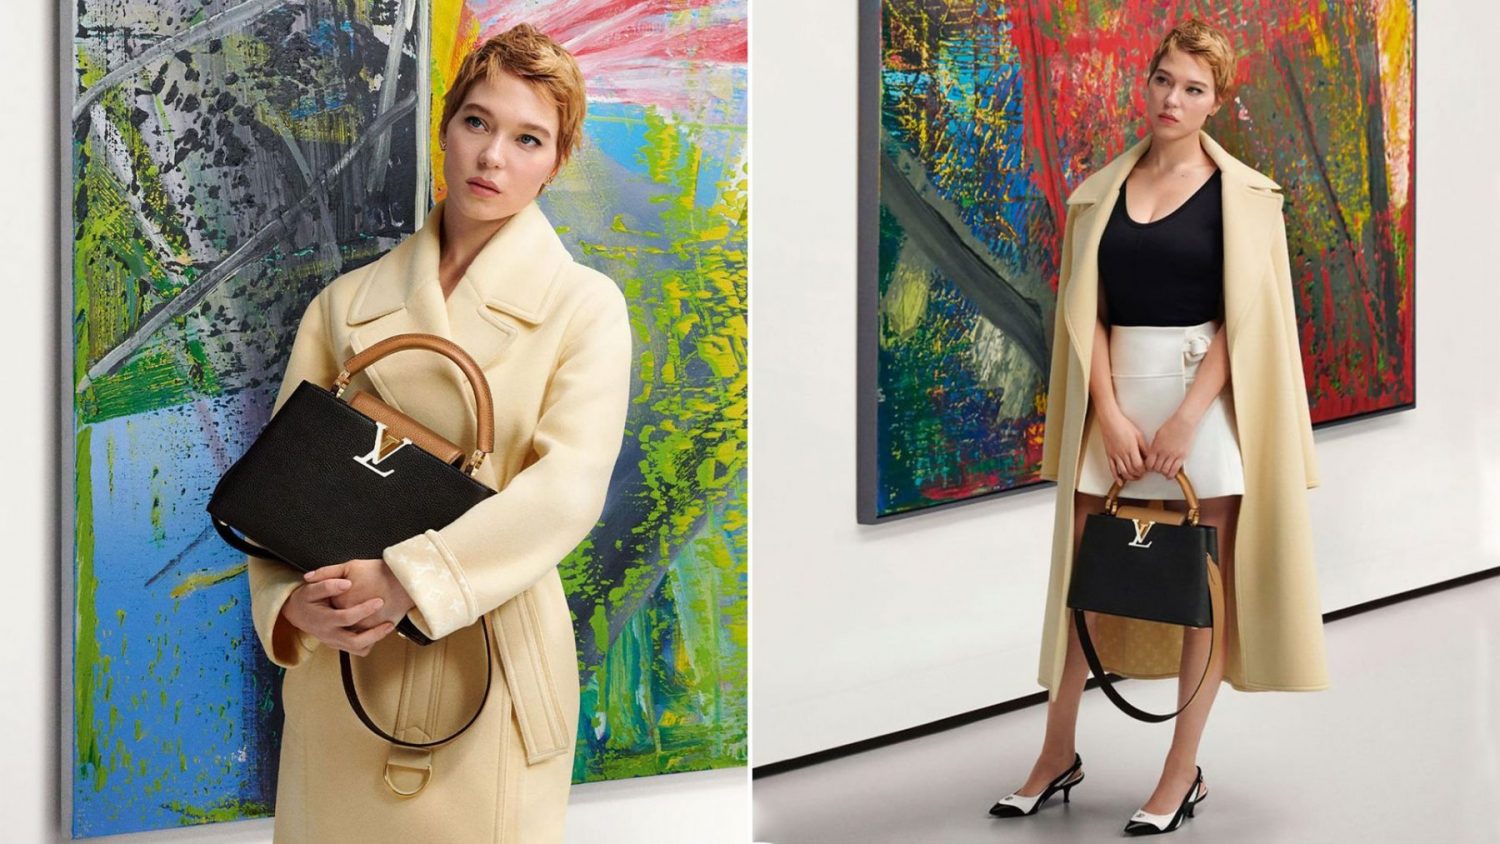 Louis Vuitton acusado de usar sin permiso obras de Joan Mitchell